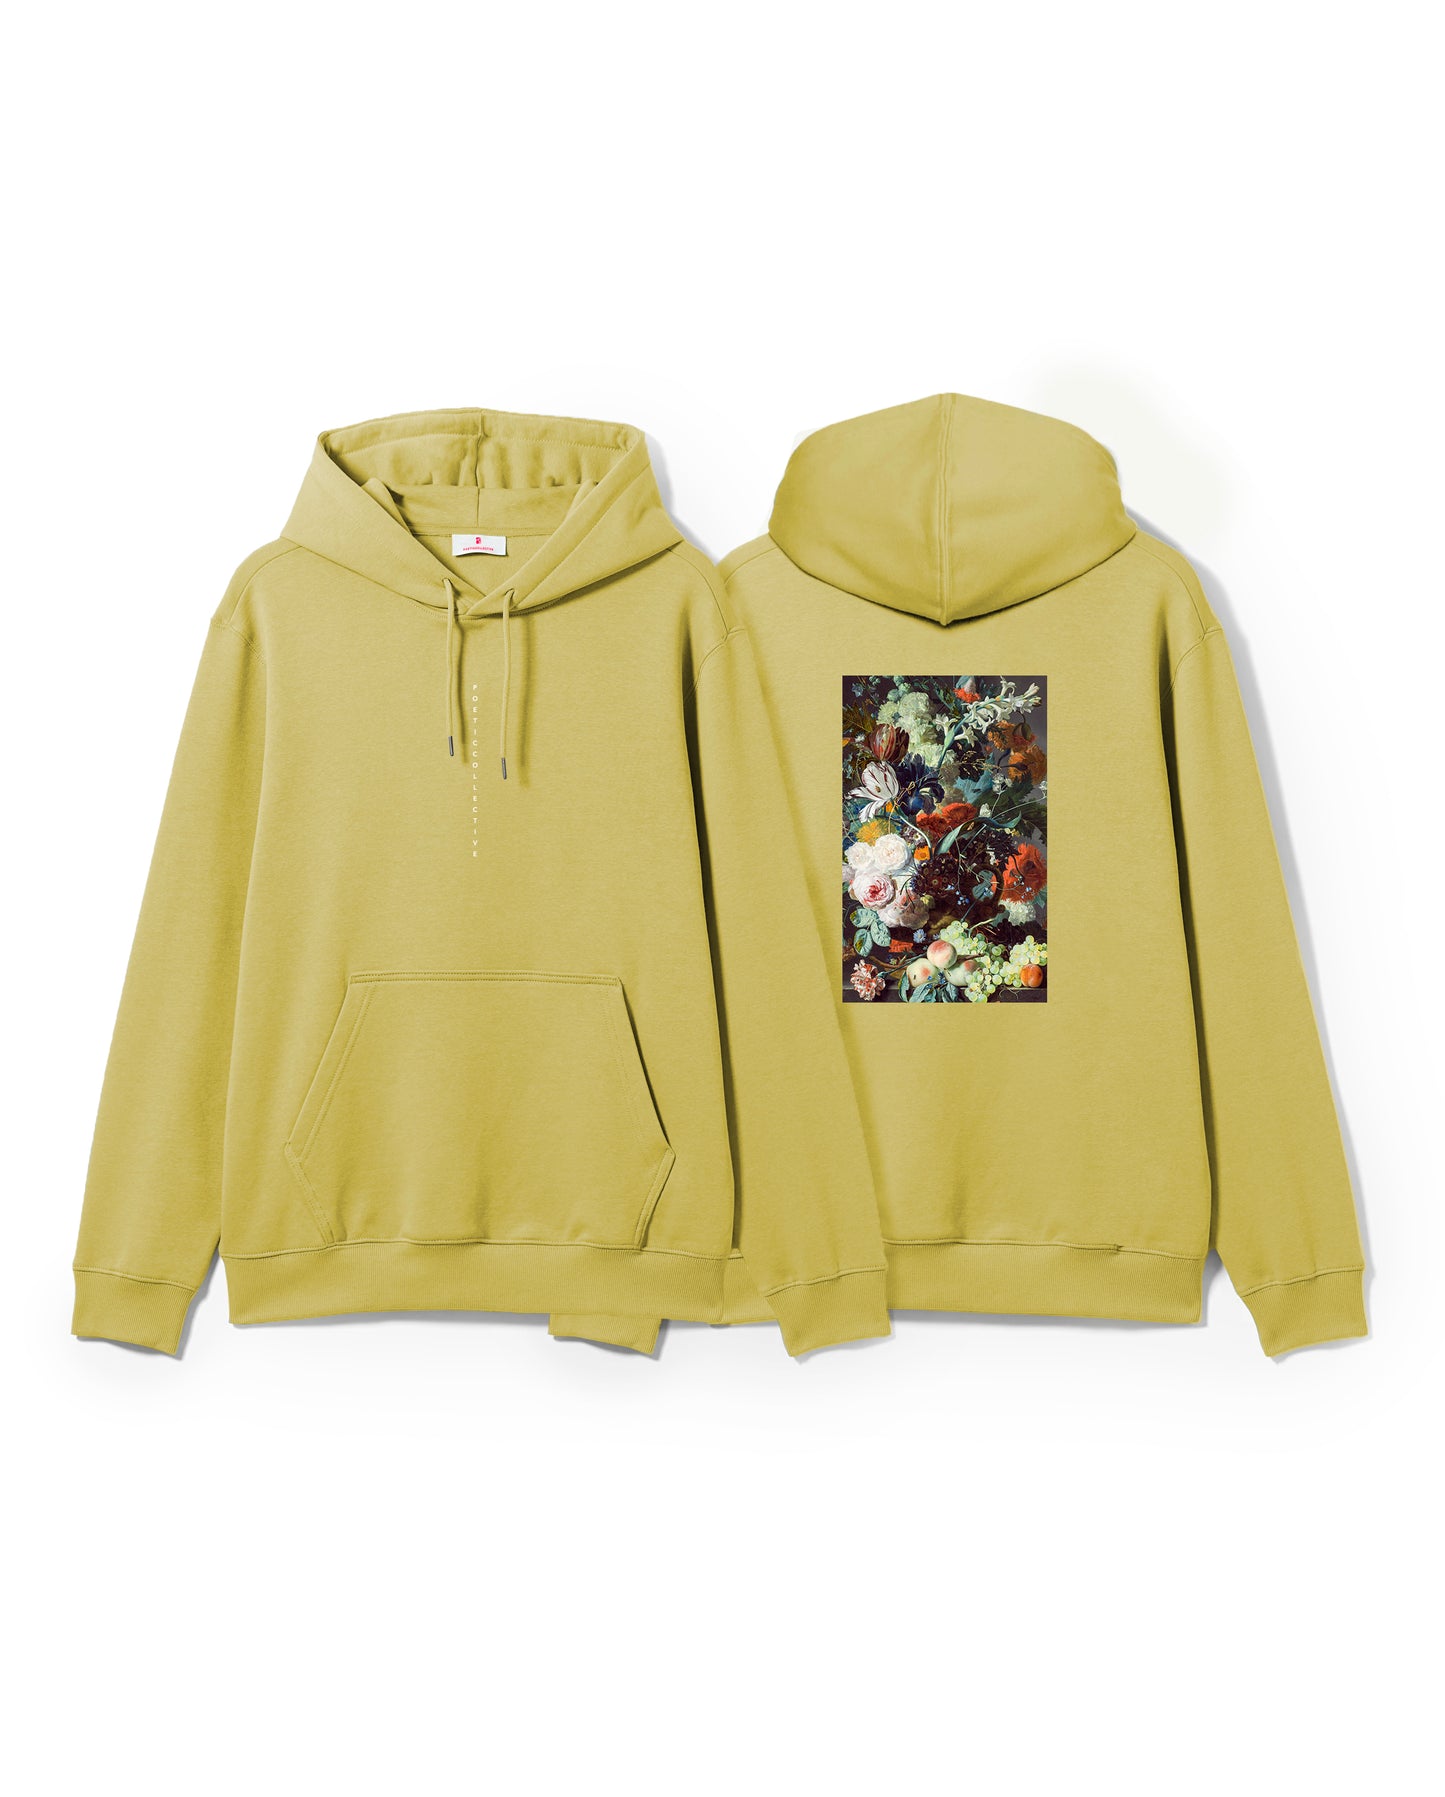 Flower hoodie - yellow